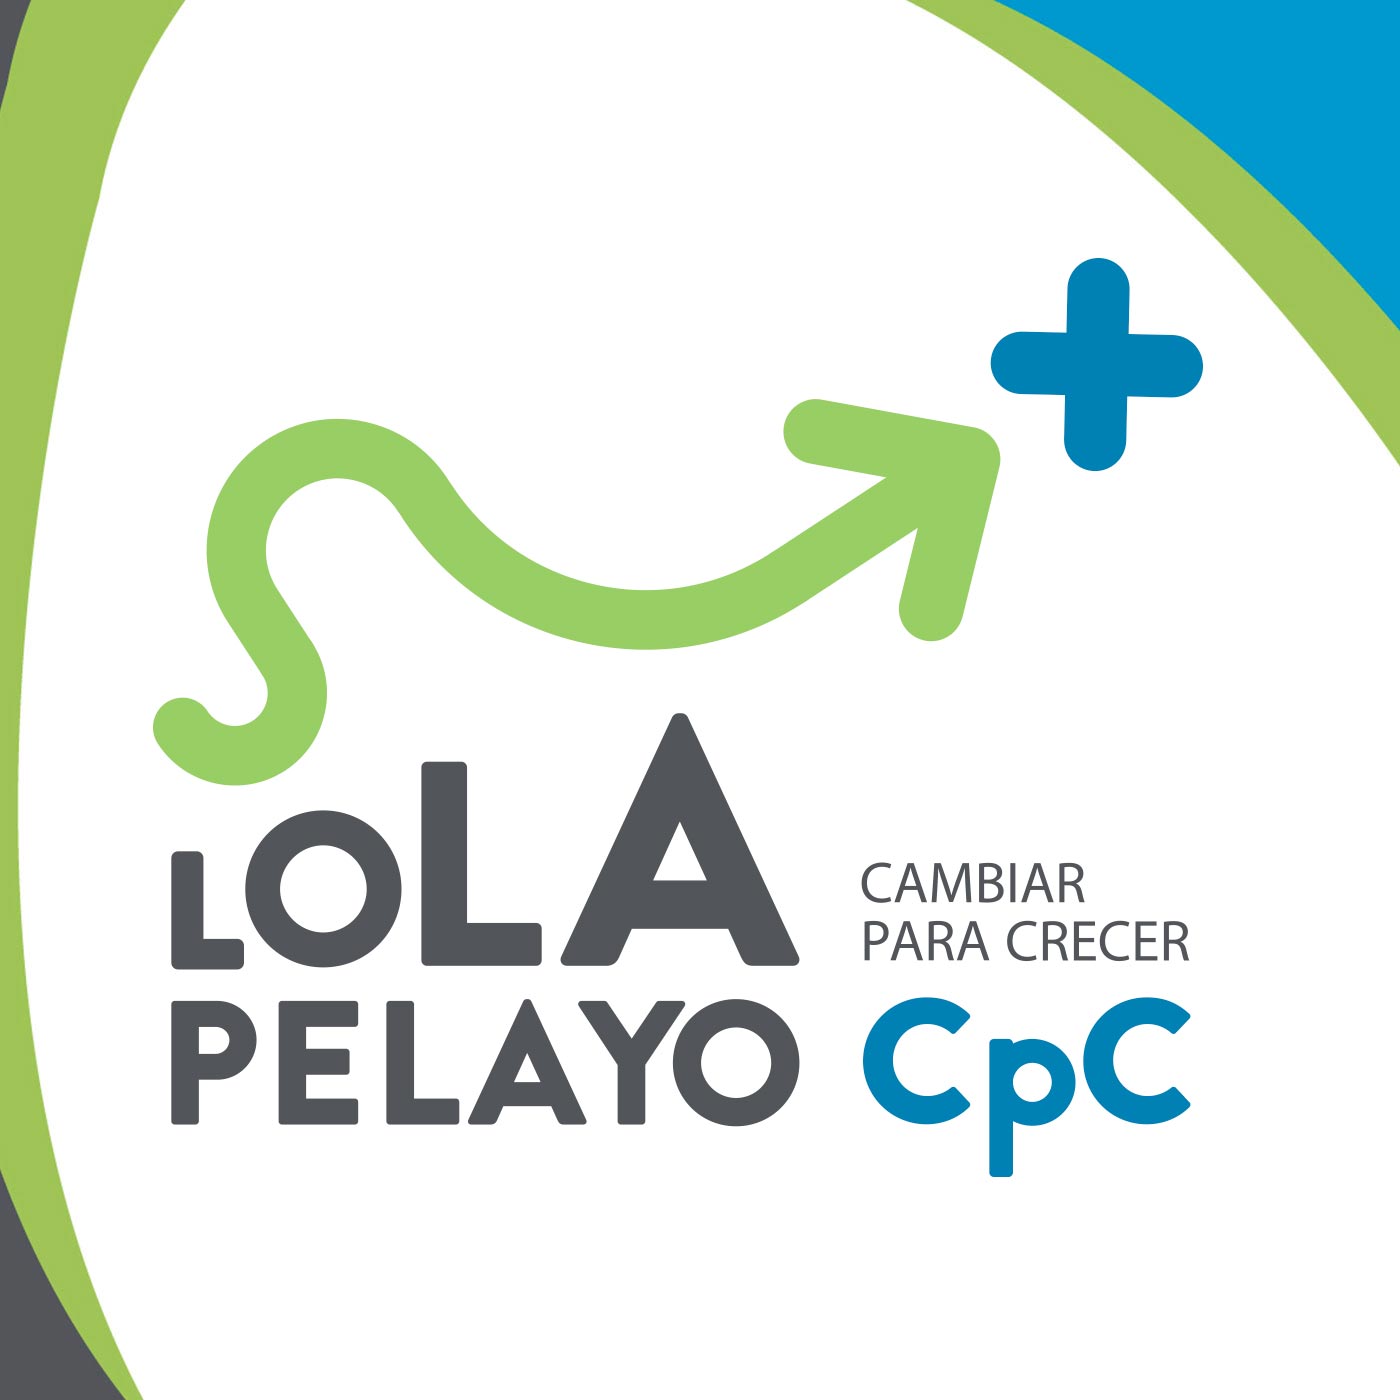 Lola Pelayo-CpC